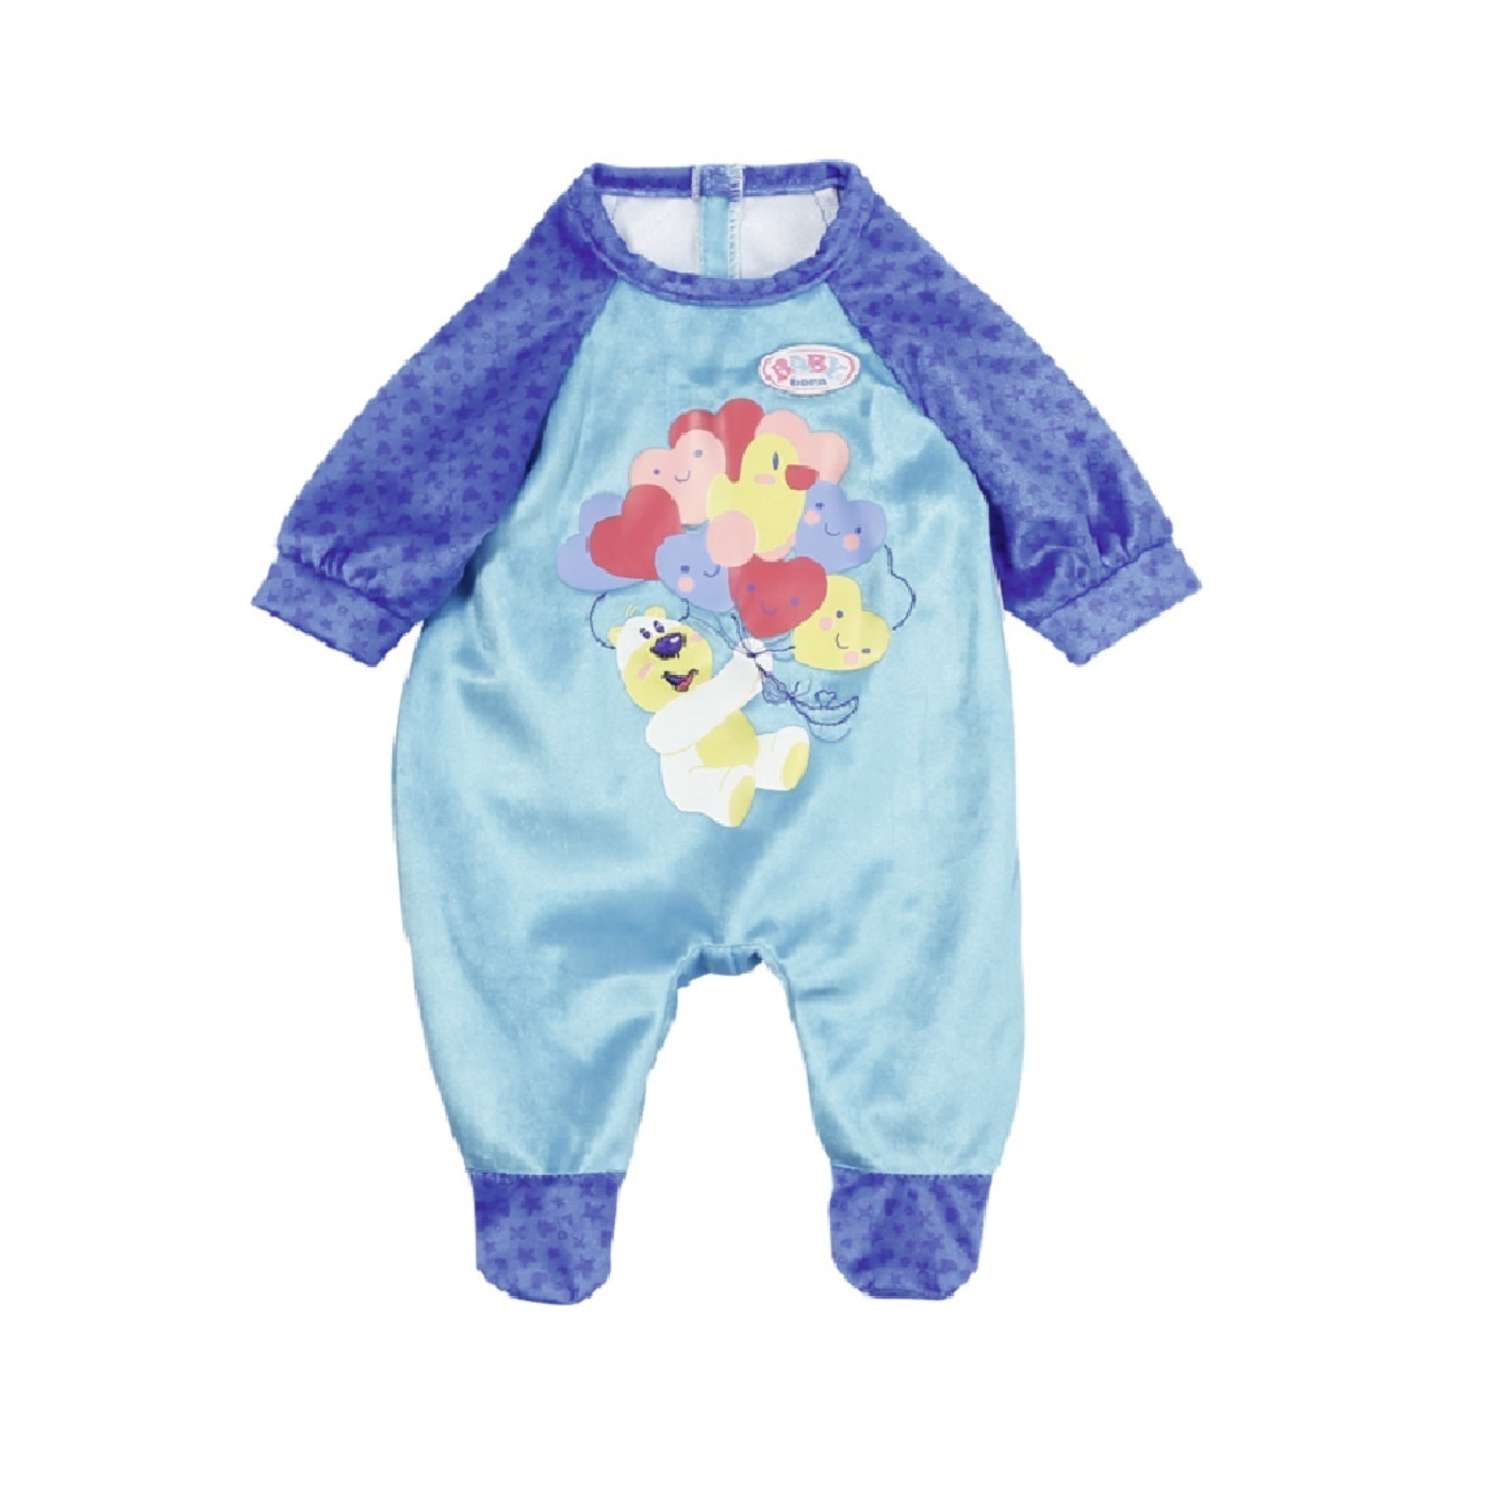 Набор одежды для куклы Zapf Creation Комбинезон голубой на куклу 43 см 828-250B - фото 1